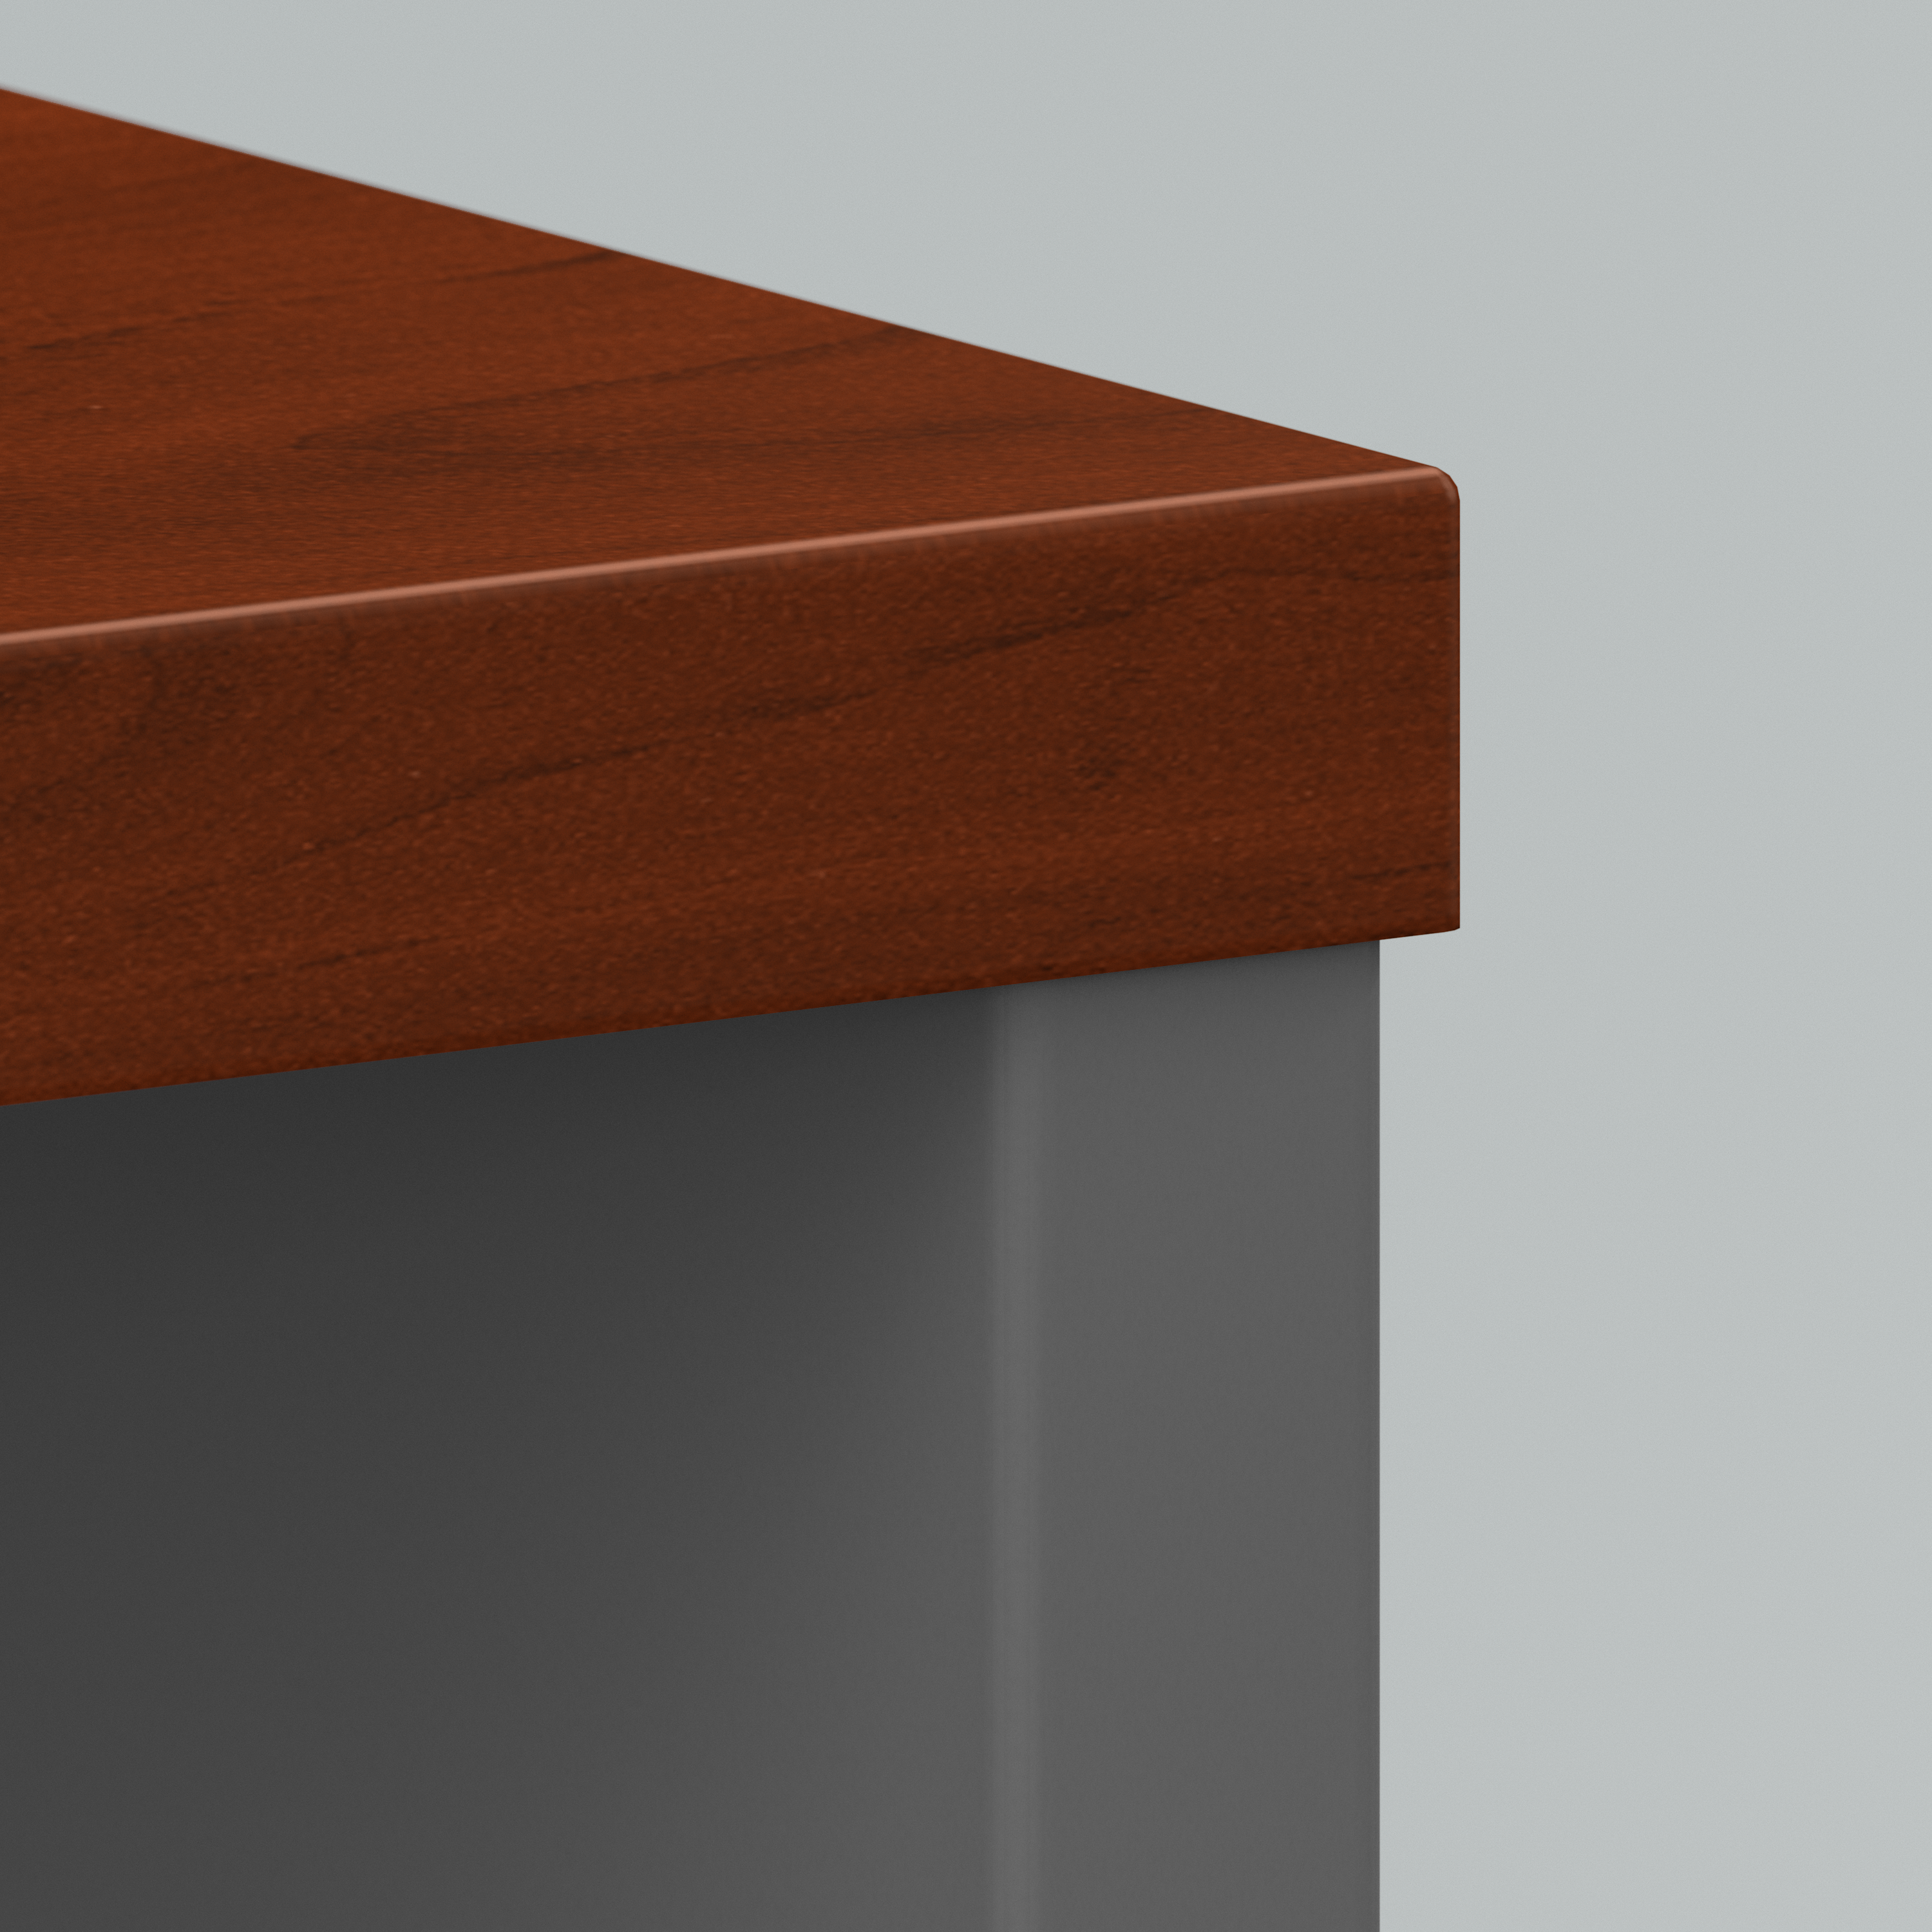 Shop Bush Business Furniture Series C Desk Credenza with 2 Drawer Mobile Pedestal 05 SRC029HCSU #color_hansen cherry